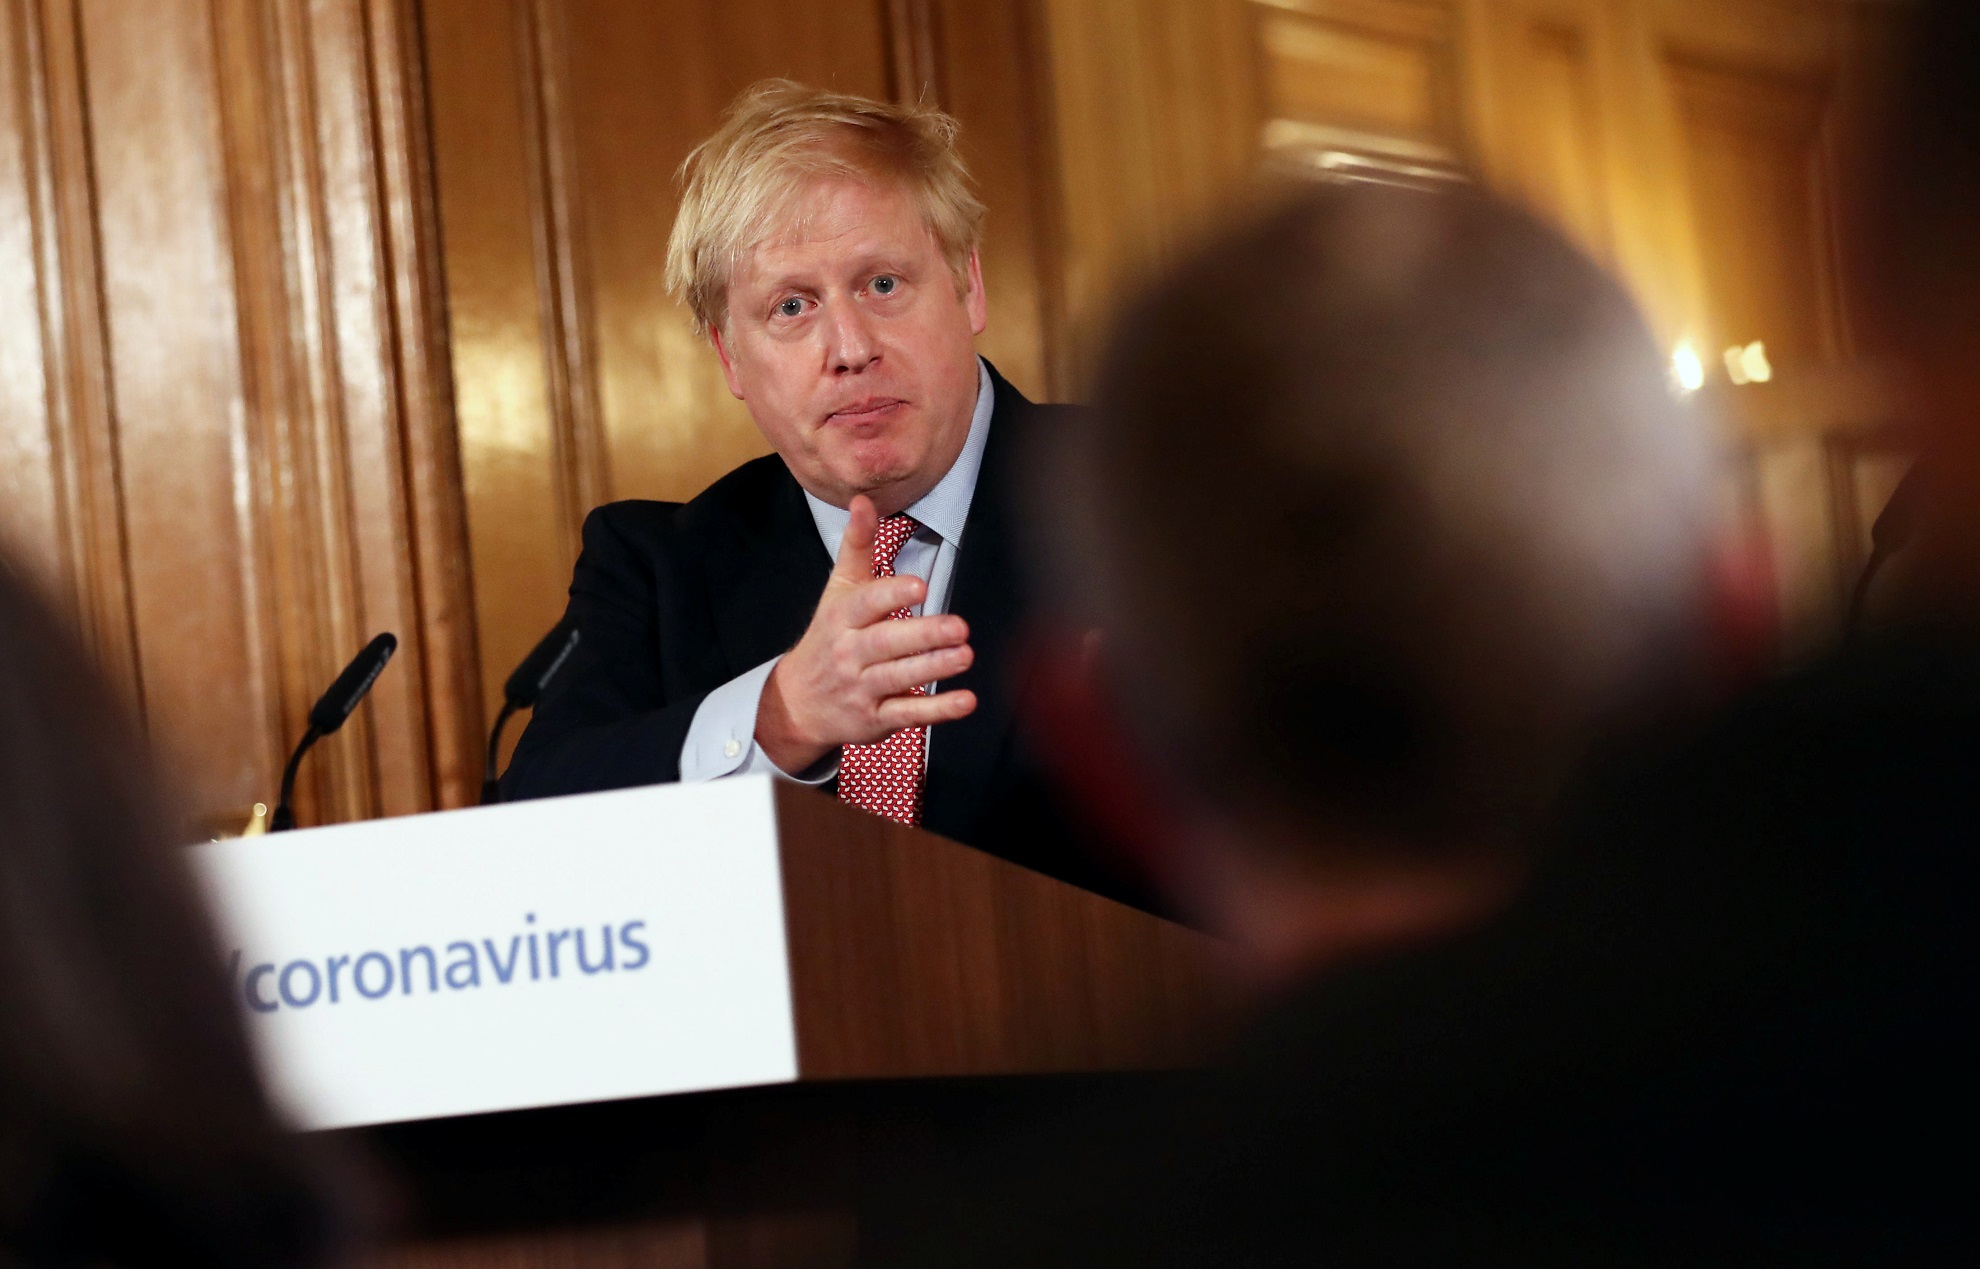 Coronavirus: Prime Minister Boris Johnson speaking in Downing Street on March 12. (Getty Images)